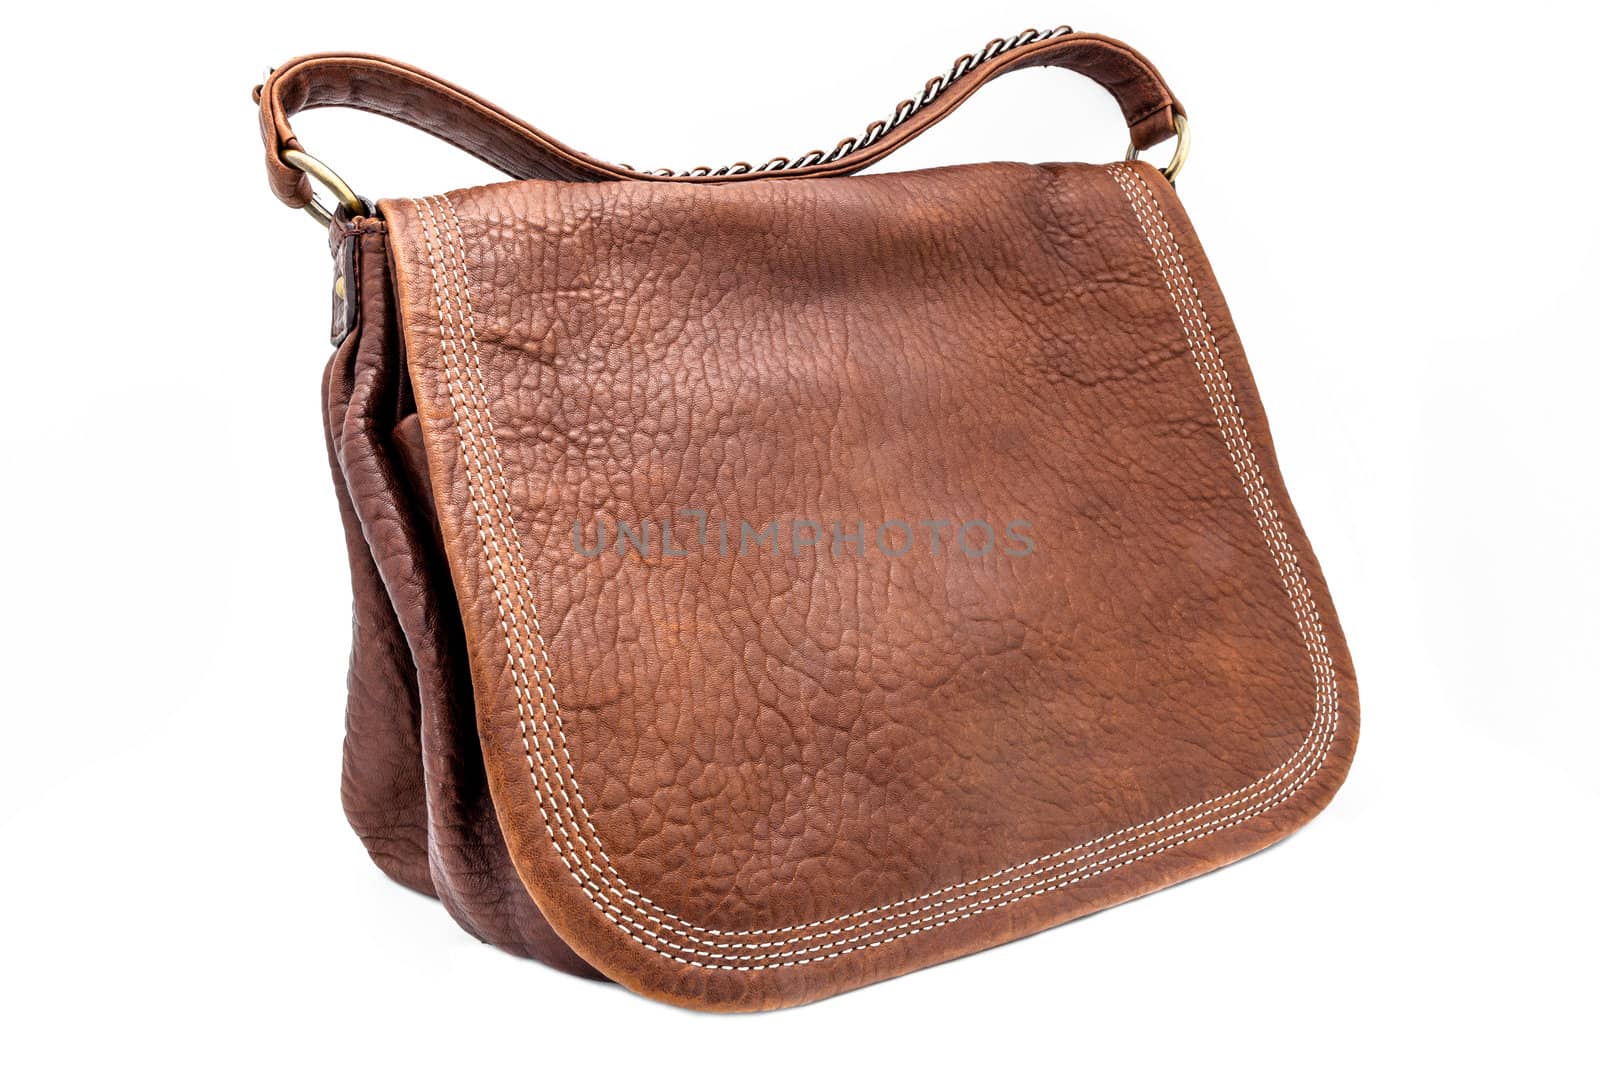 Leathern handbag by viledevil